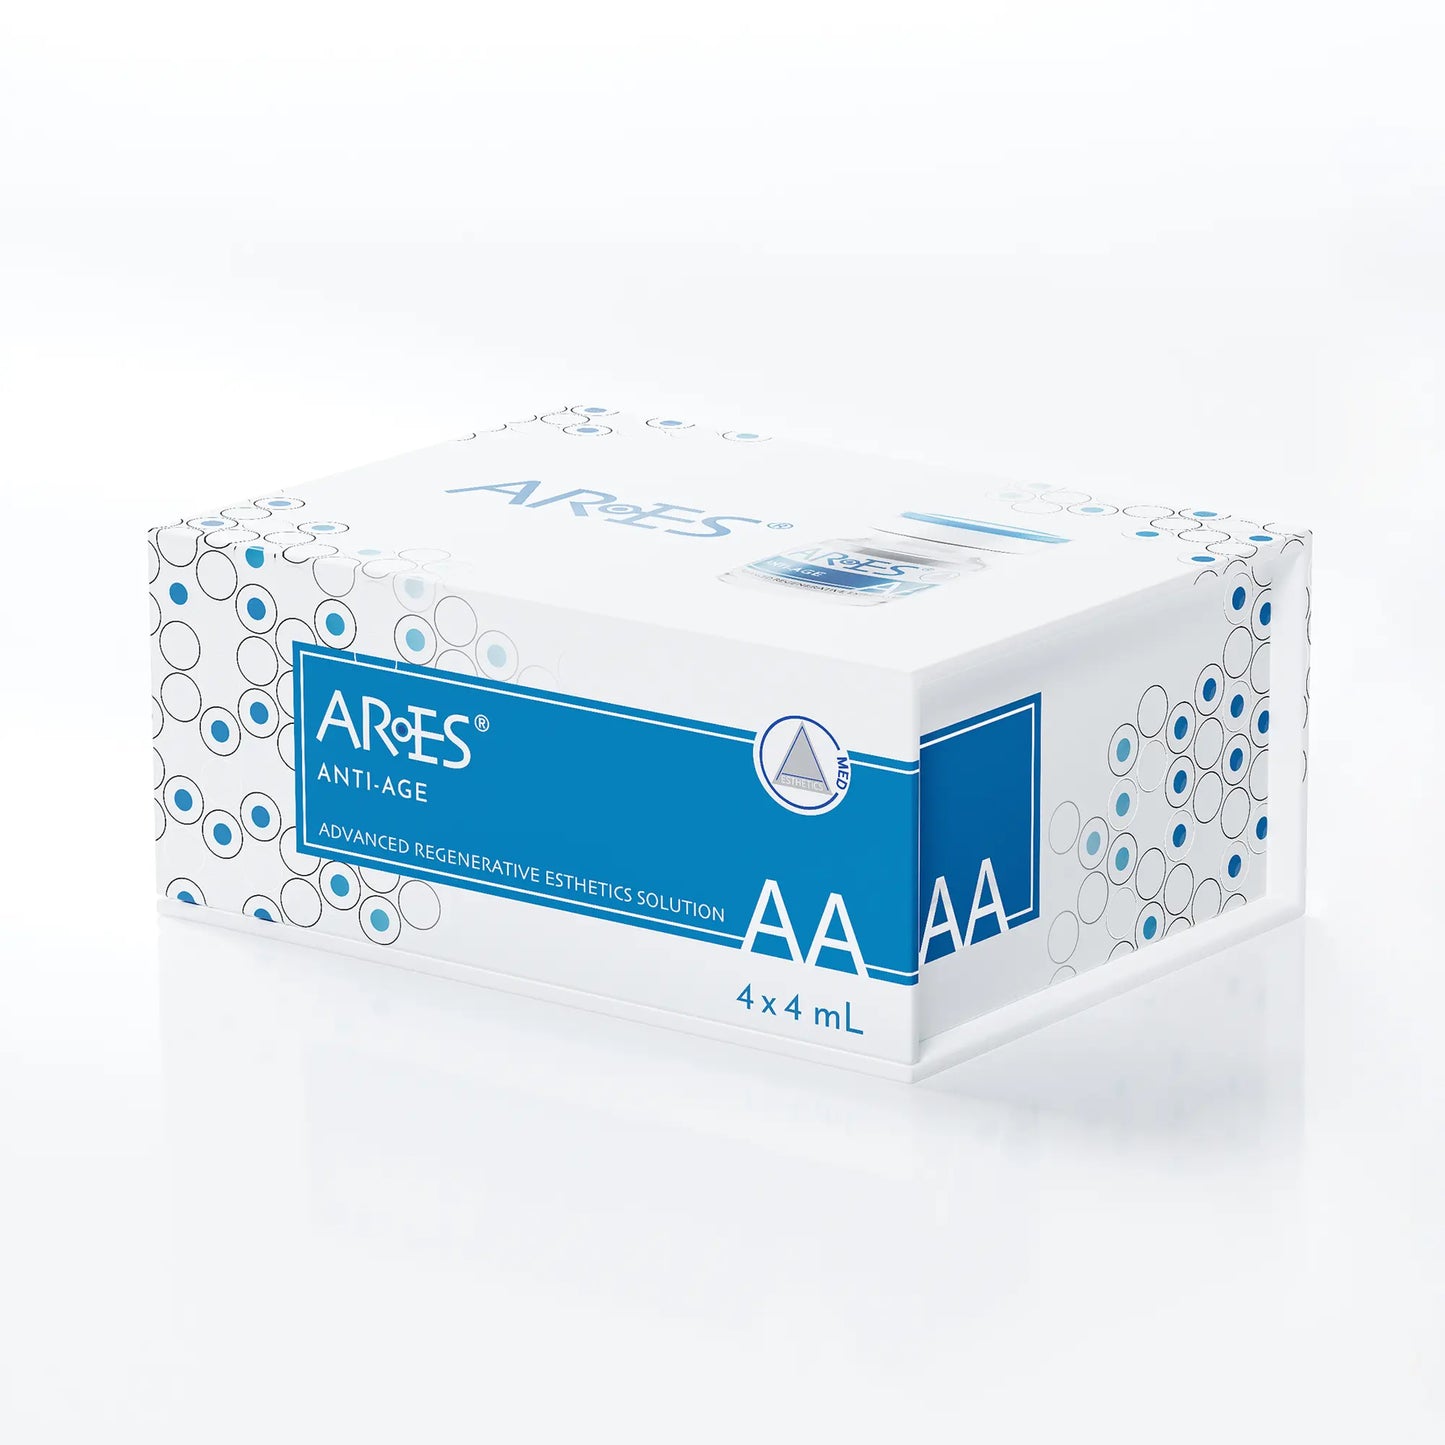 Ares AA Anti-Age